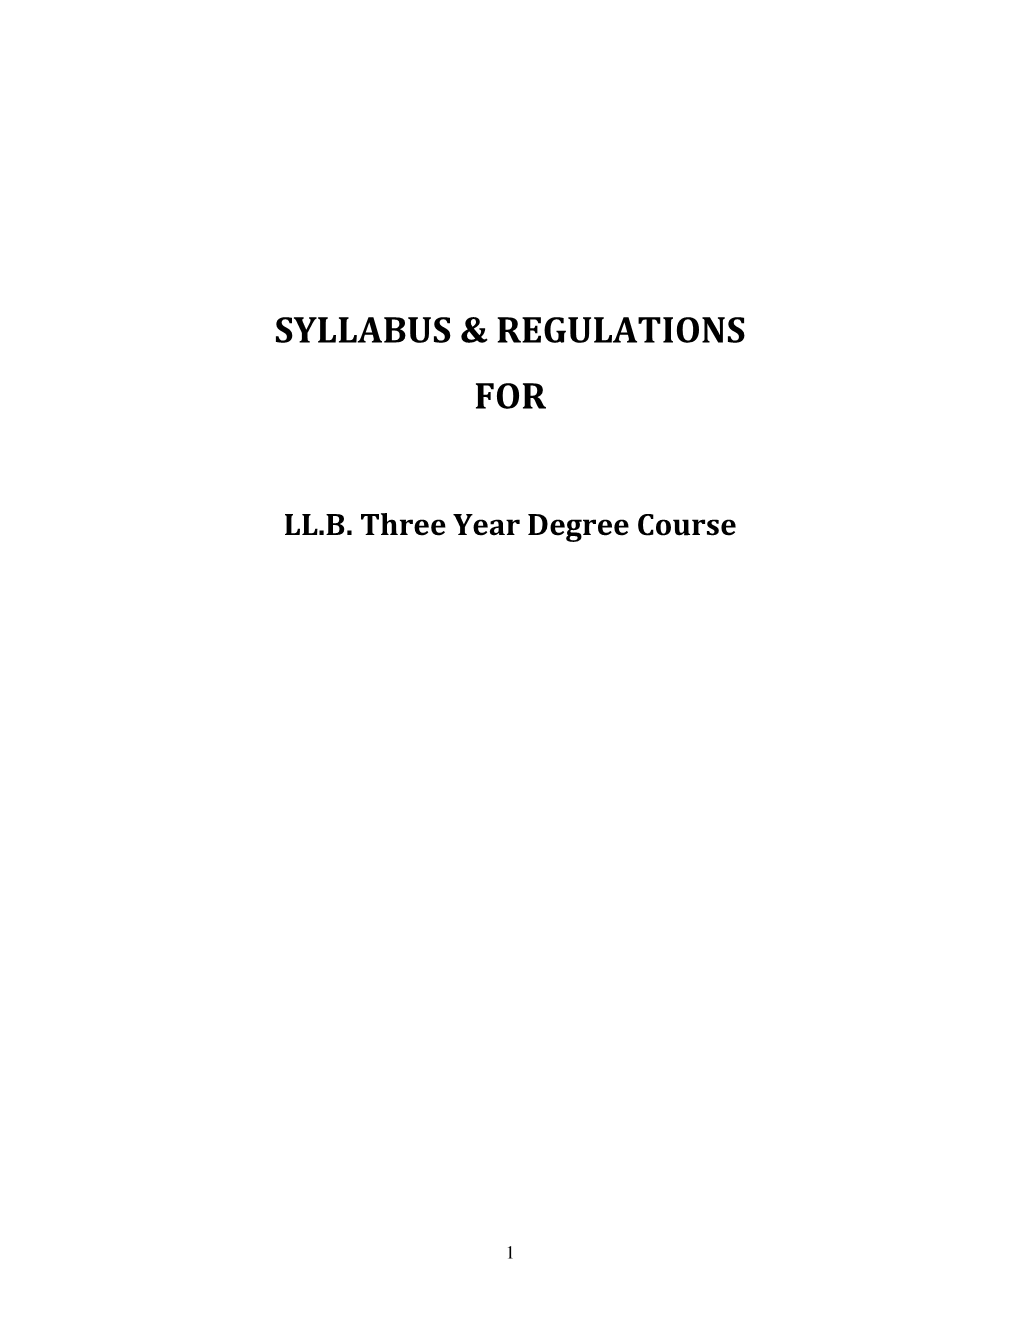 Syllabus & Regulations